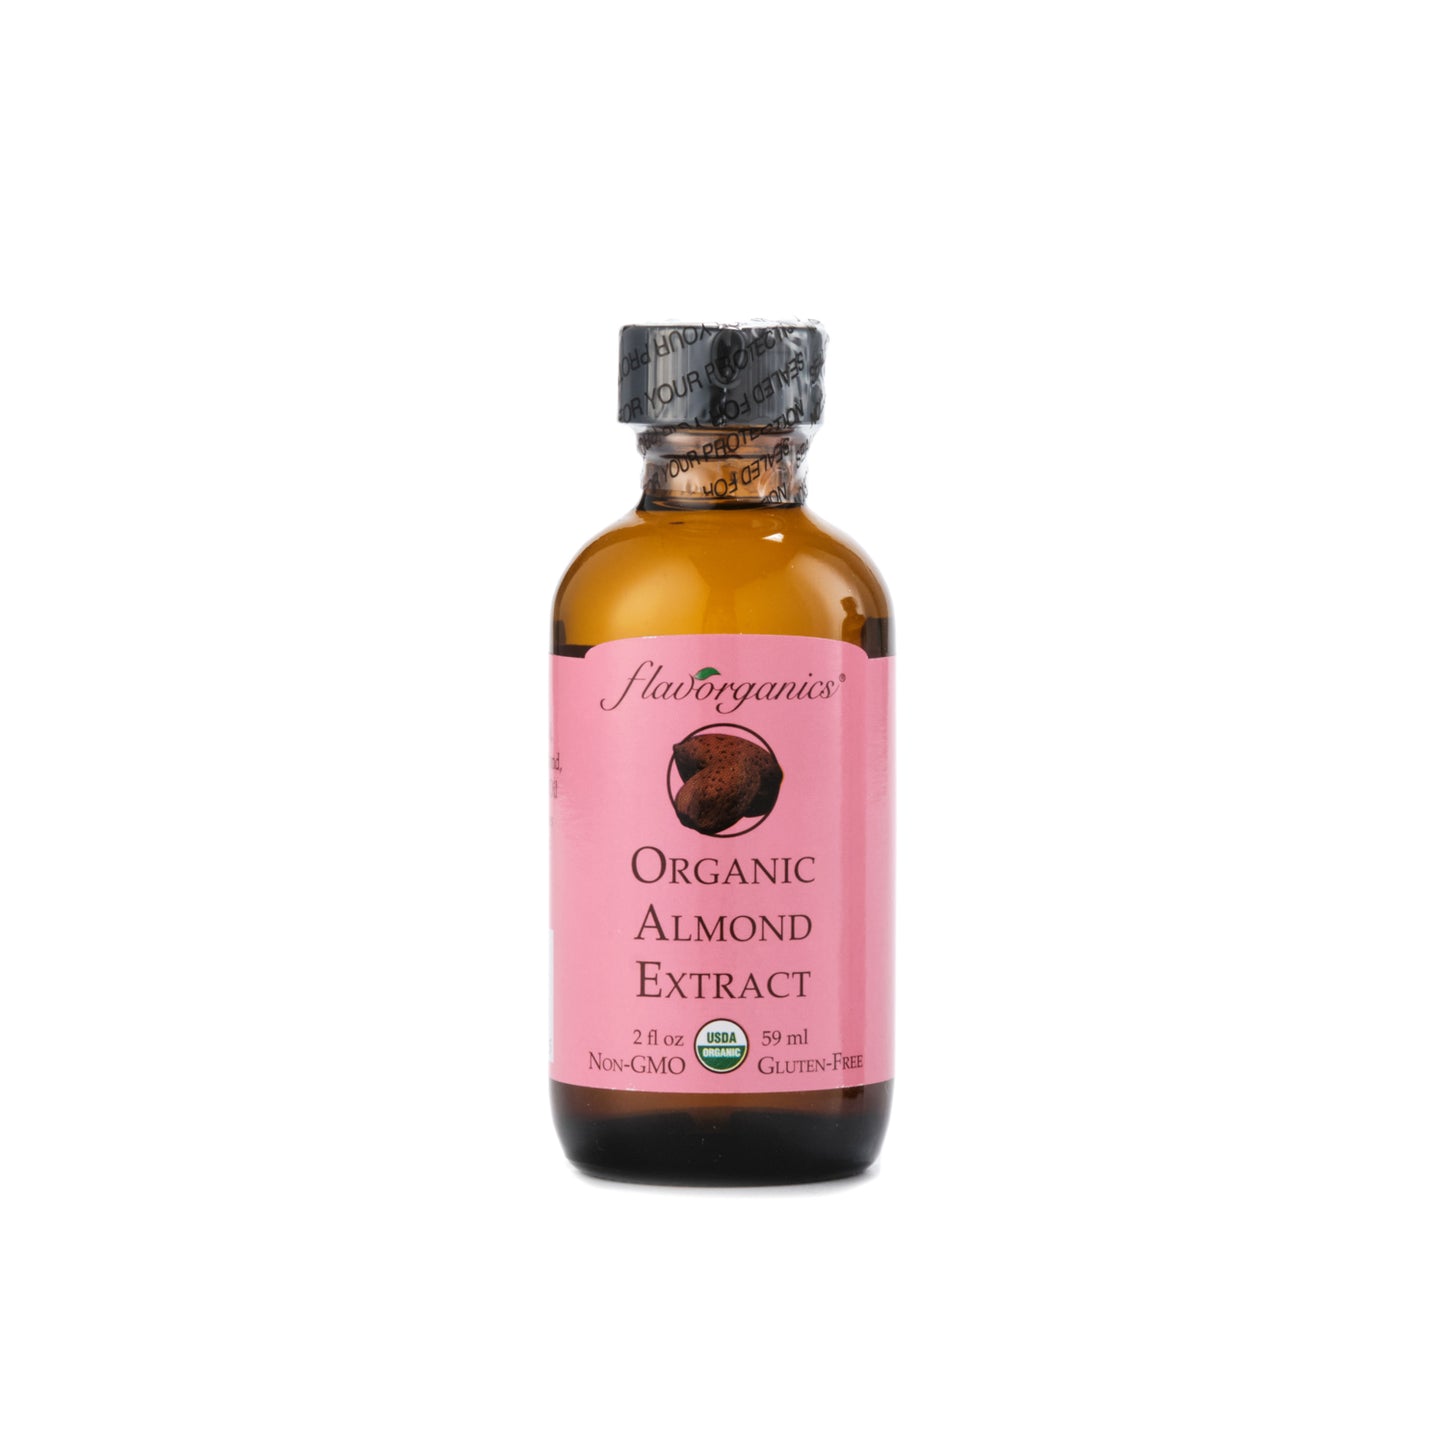 Flavorganics Organic Almond Extract 59mL